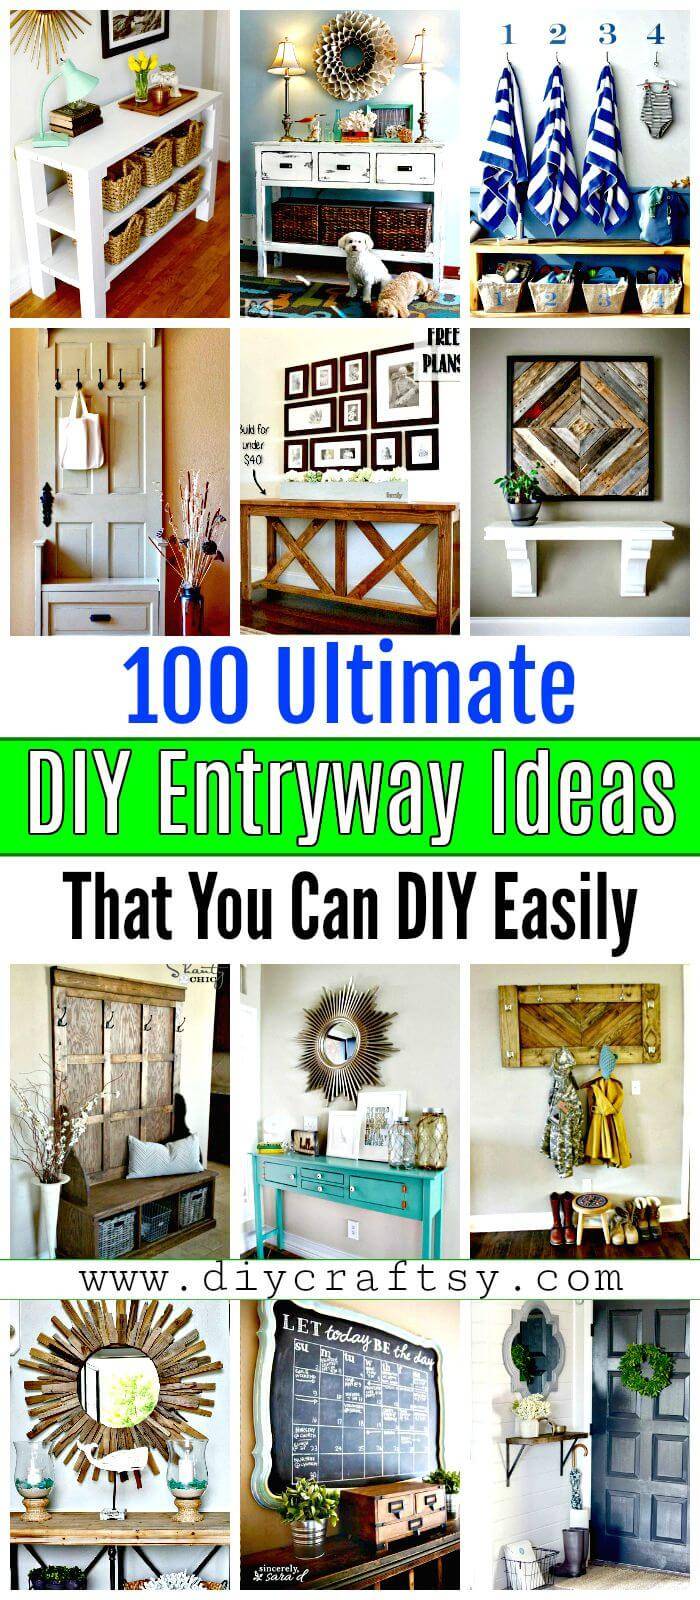 25 Ultimate DIY Entryway Ideas That You Can DIY Easily   DIY Crafts